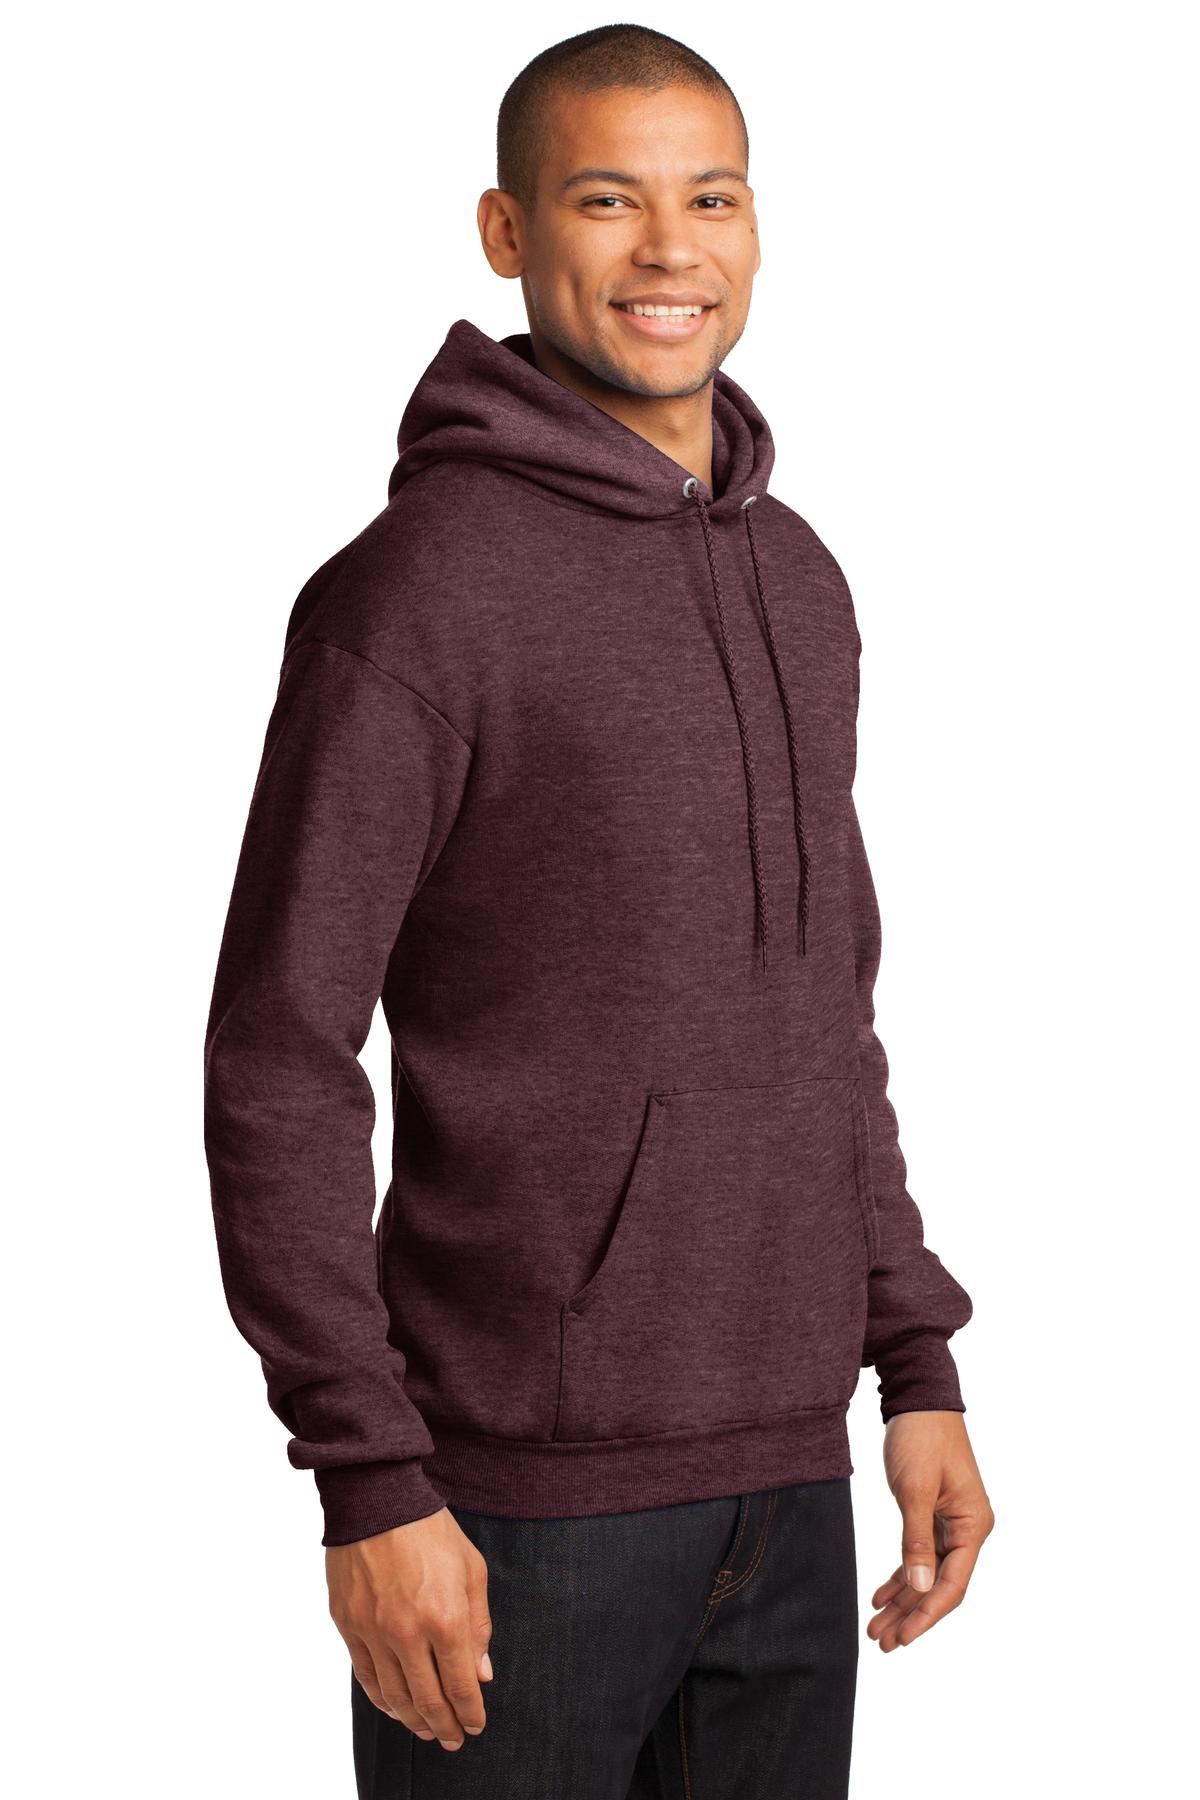 Port & Company - Core Fleece Pullover Hooded Sweatshirt. PC78H - Heather Athletic Maroon